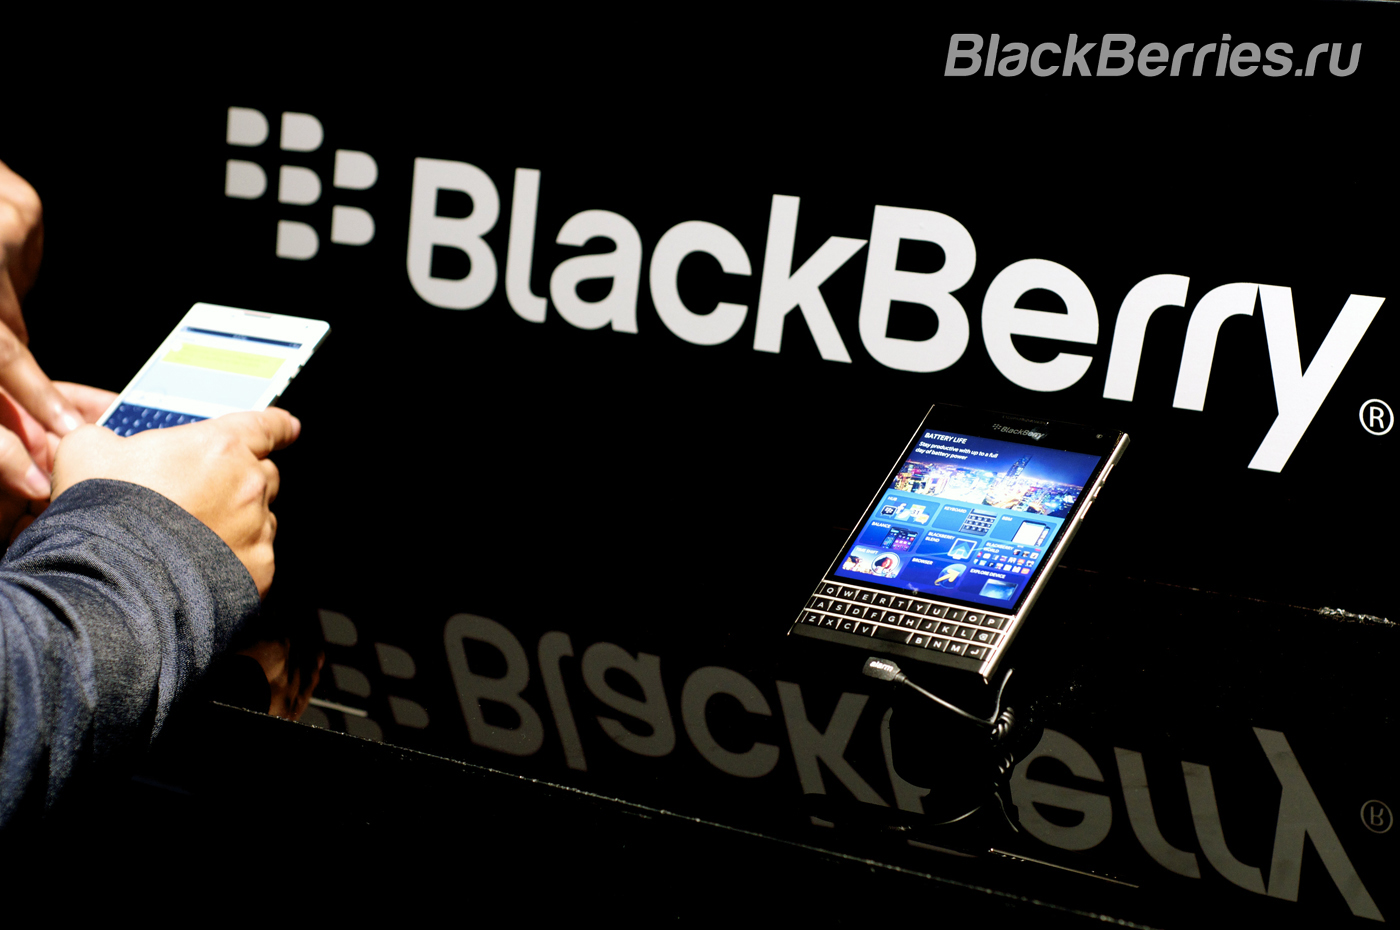 BlackBerry-Passport-Event-061